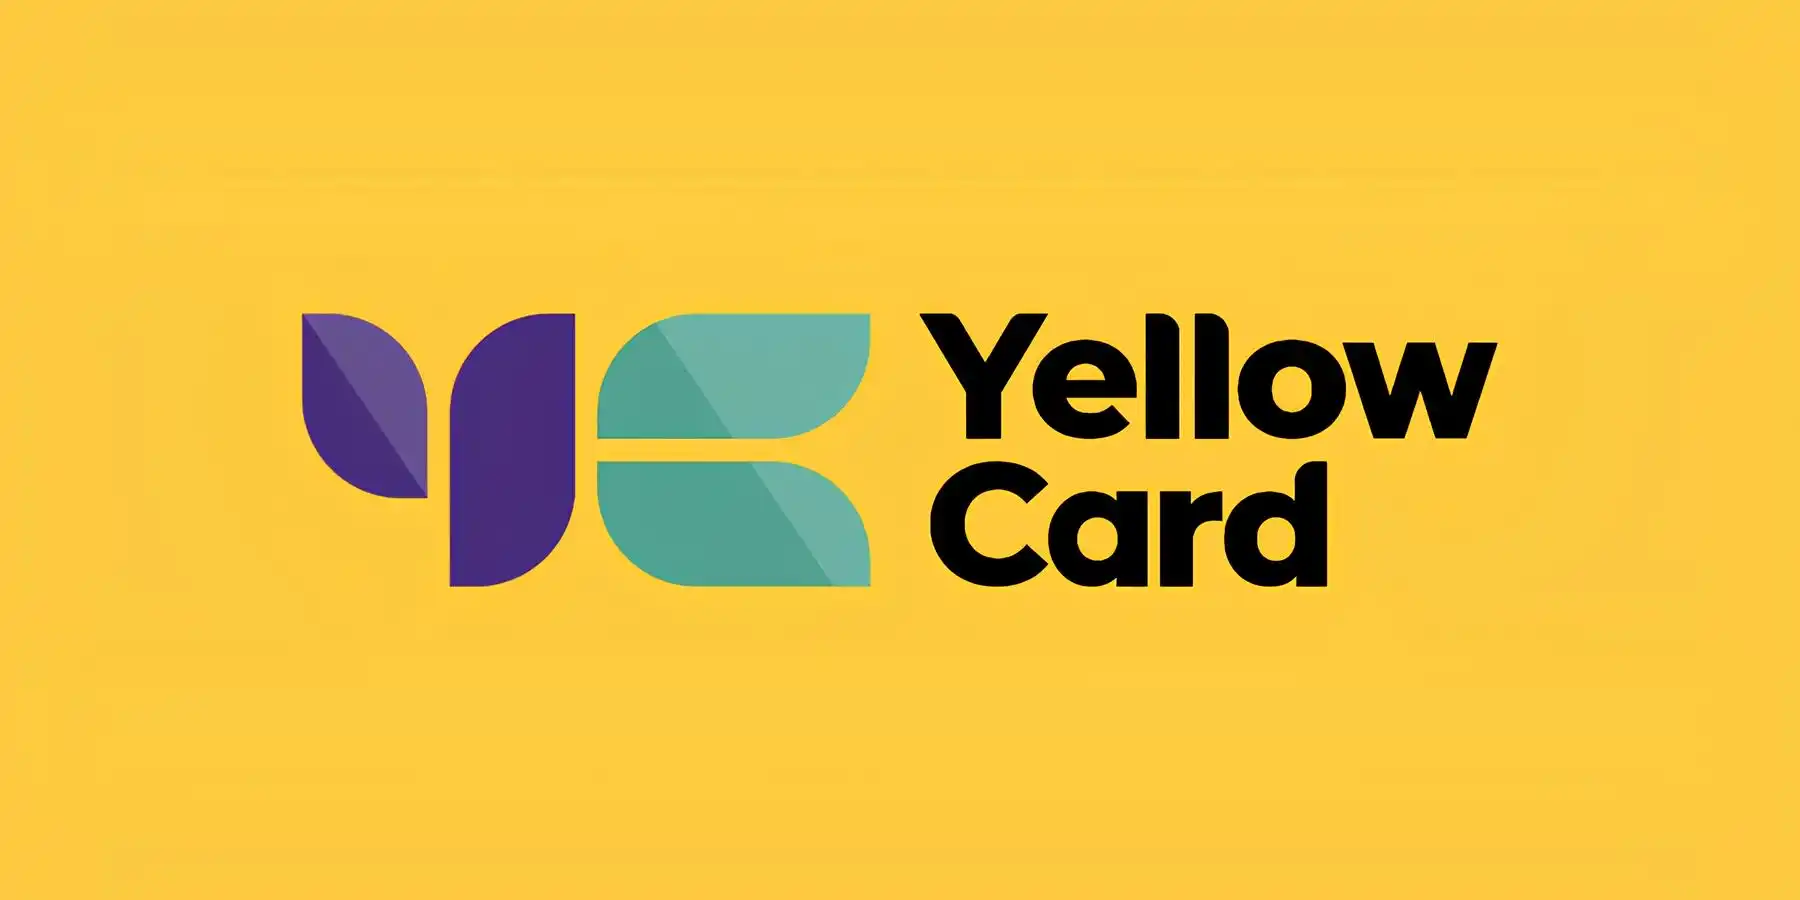 Yellow card app